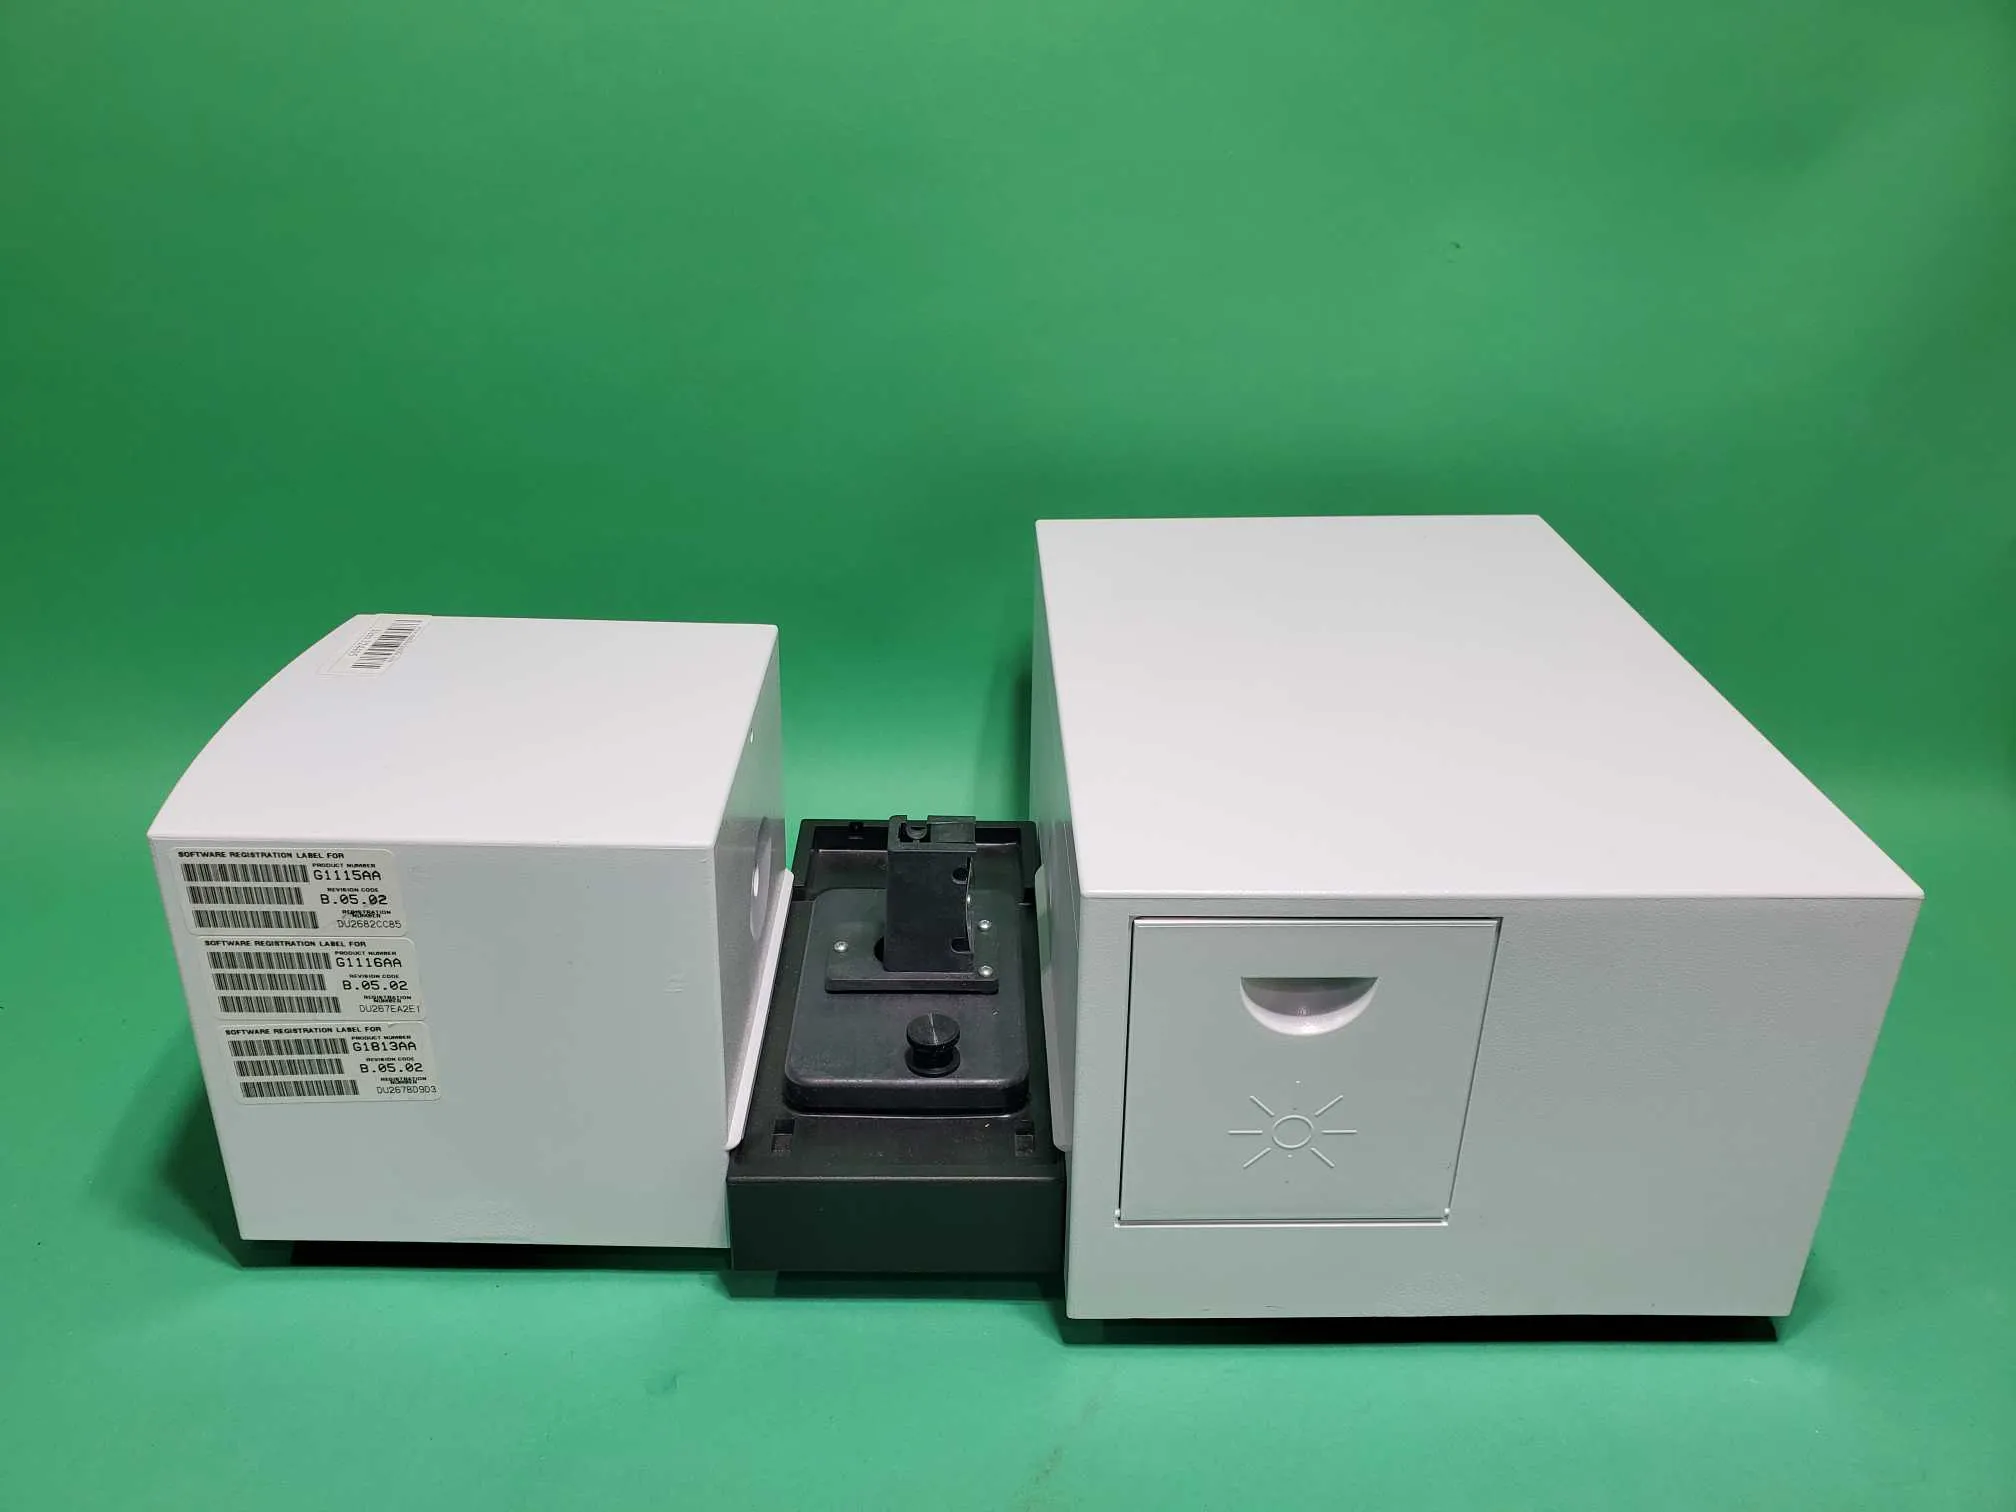 Agilent Technologies Cary 8454 UV-Vis Spectrophotometer